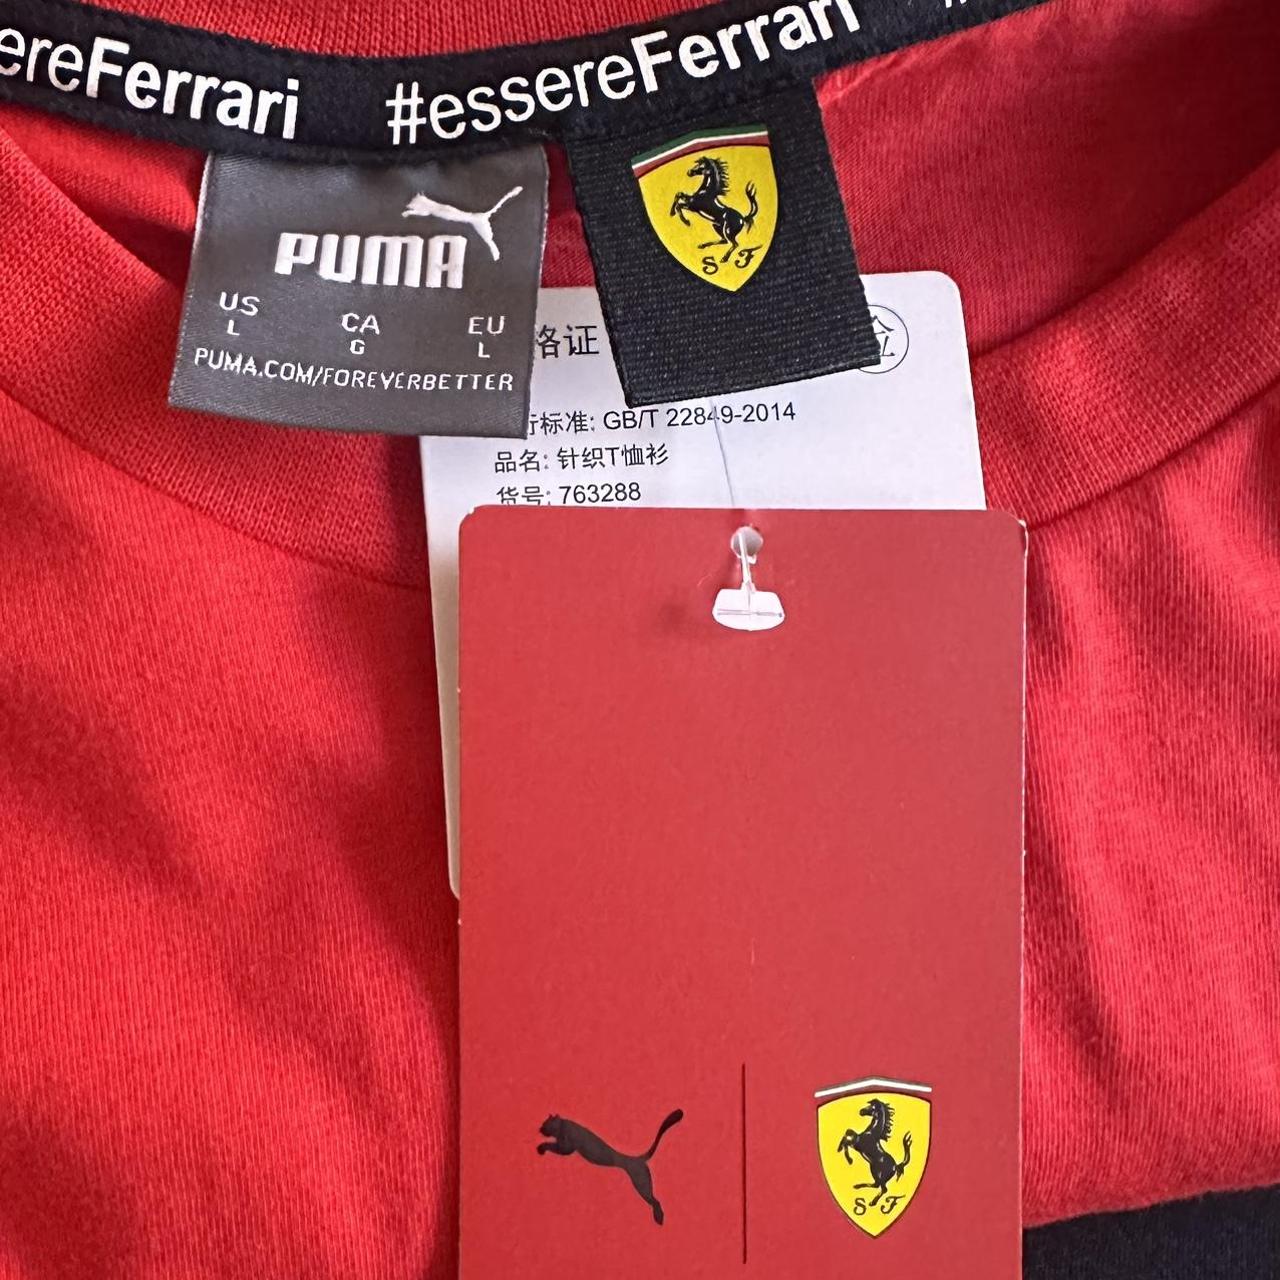 Ferrari Men's Red and Black T-shirt (3)